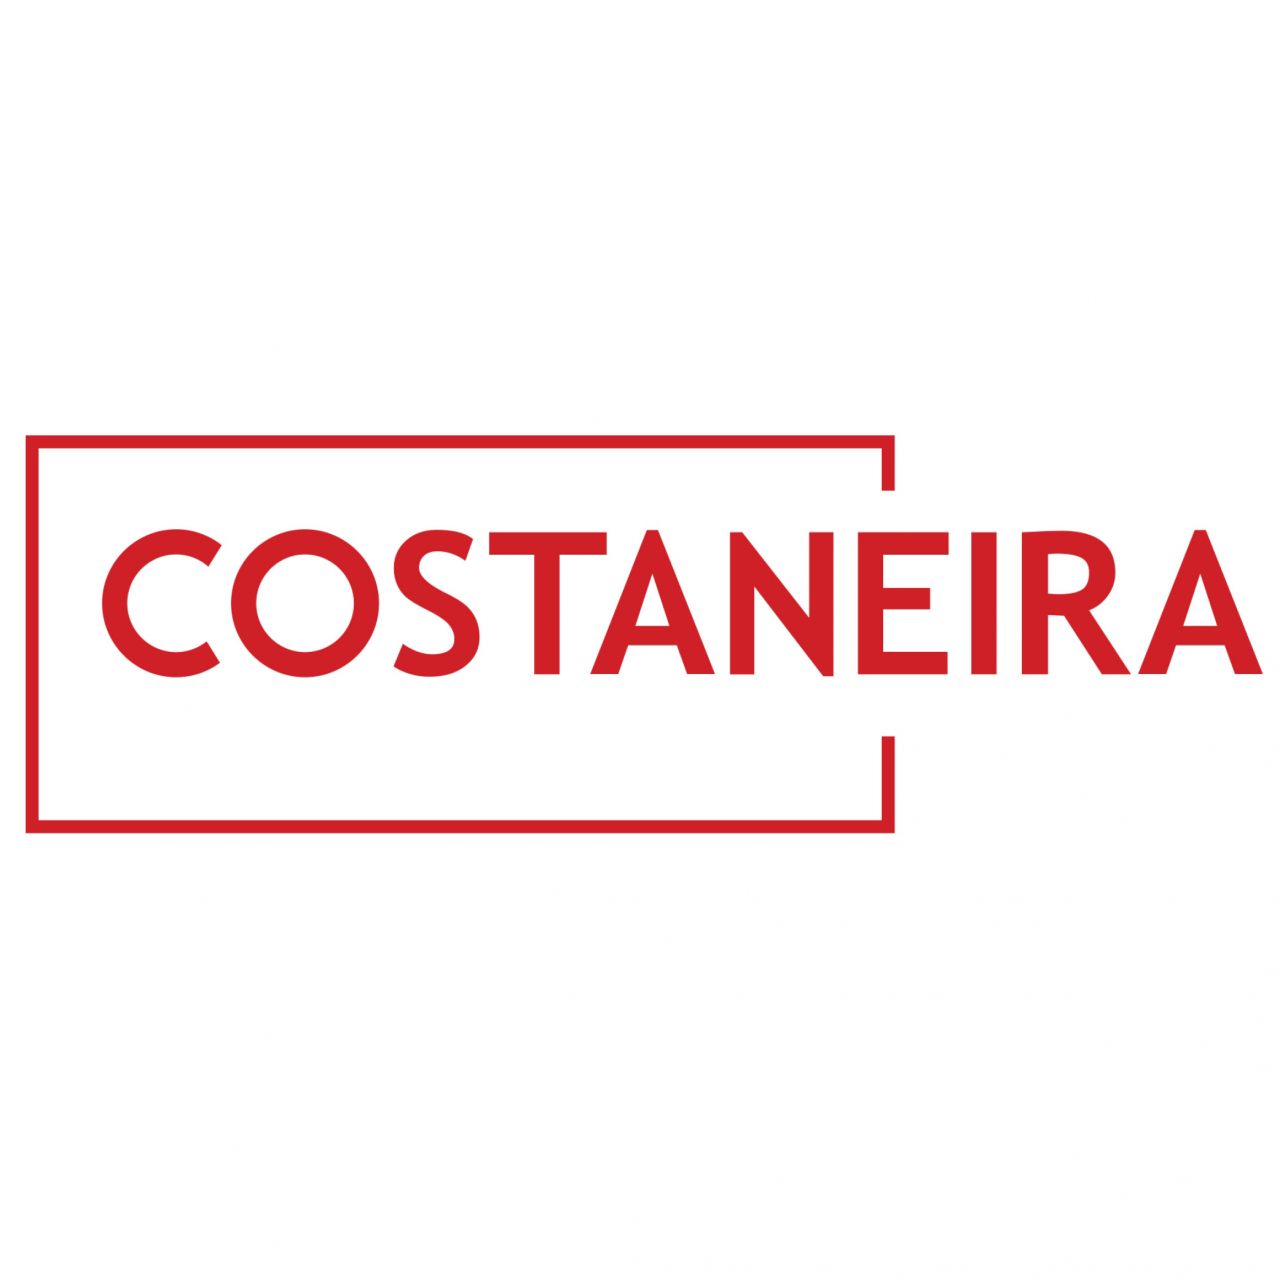 Costaneira